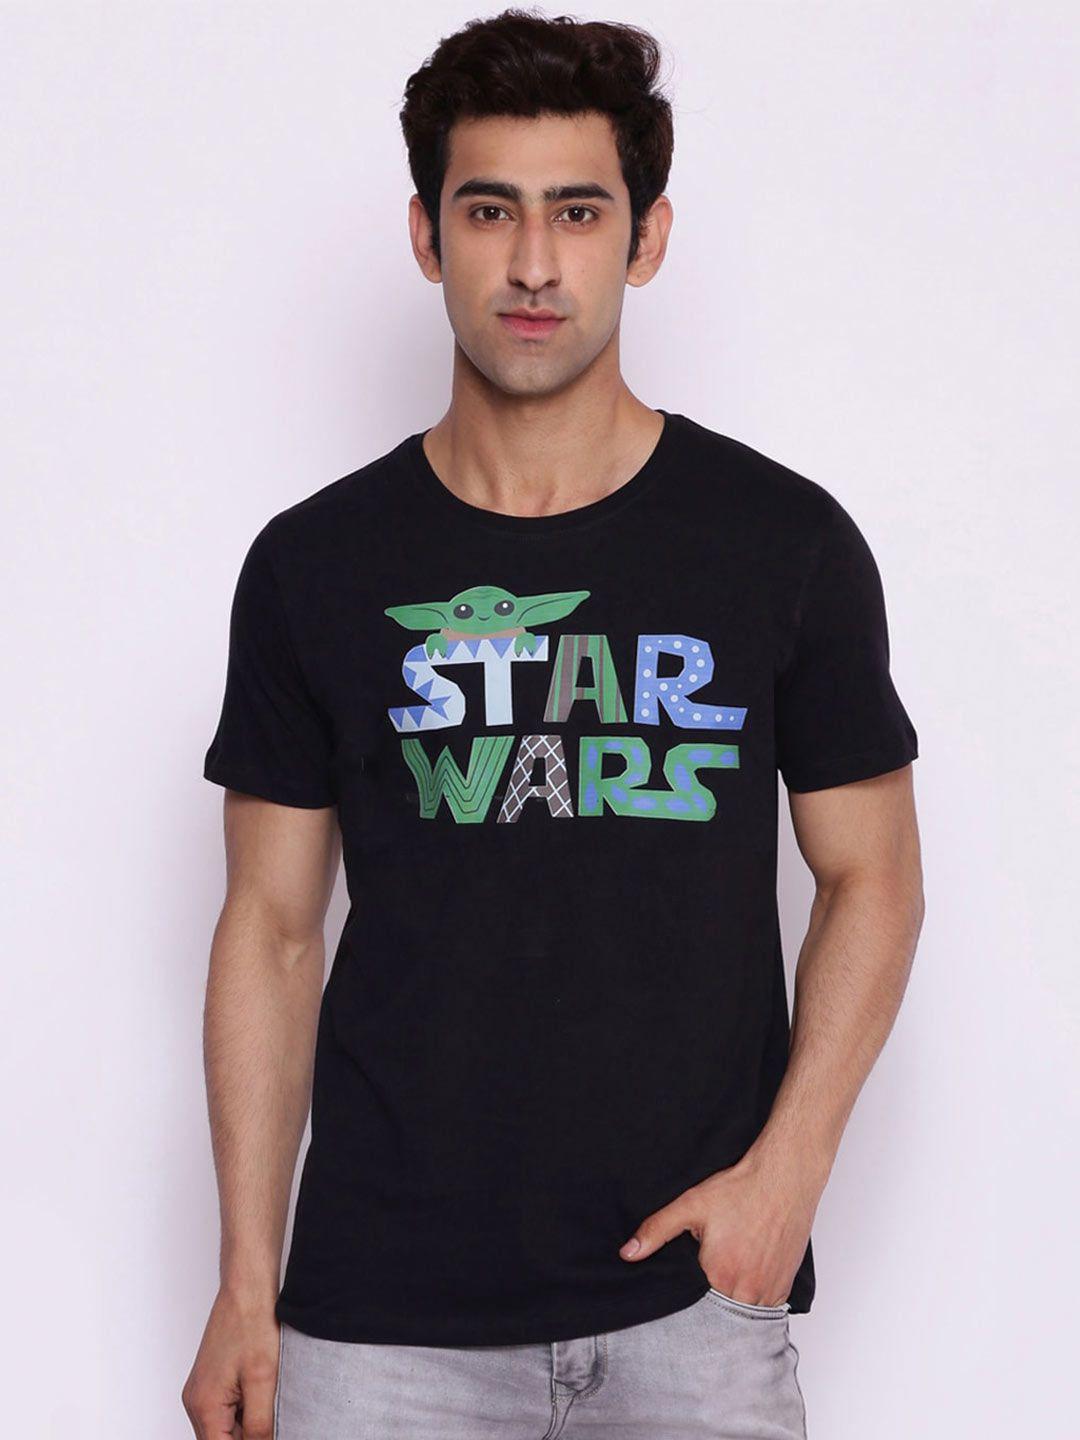 star wars by wear your mind men black & green star wars printed t-shirt